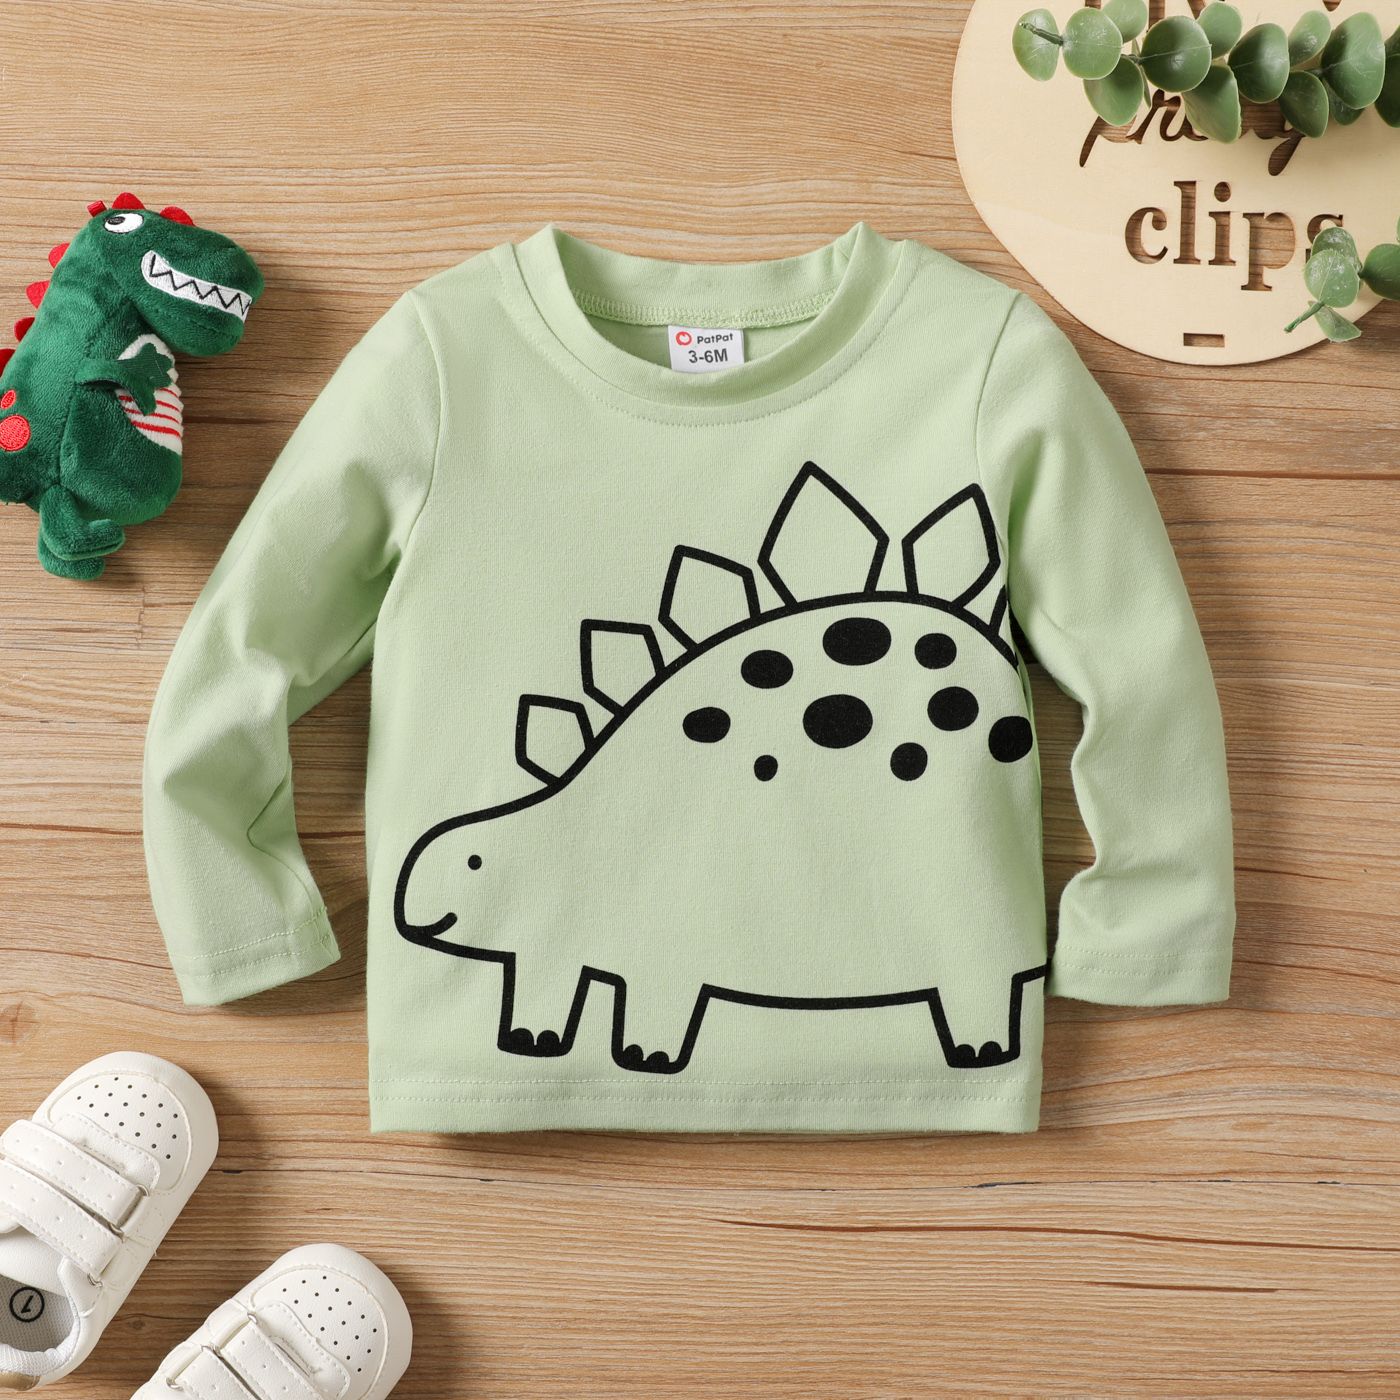 Baby/Toddler Boy/Girl Childlike Animal Pattern Long-sleeved T-shirt